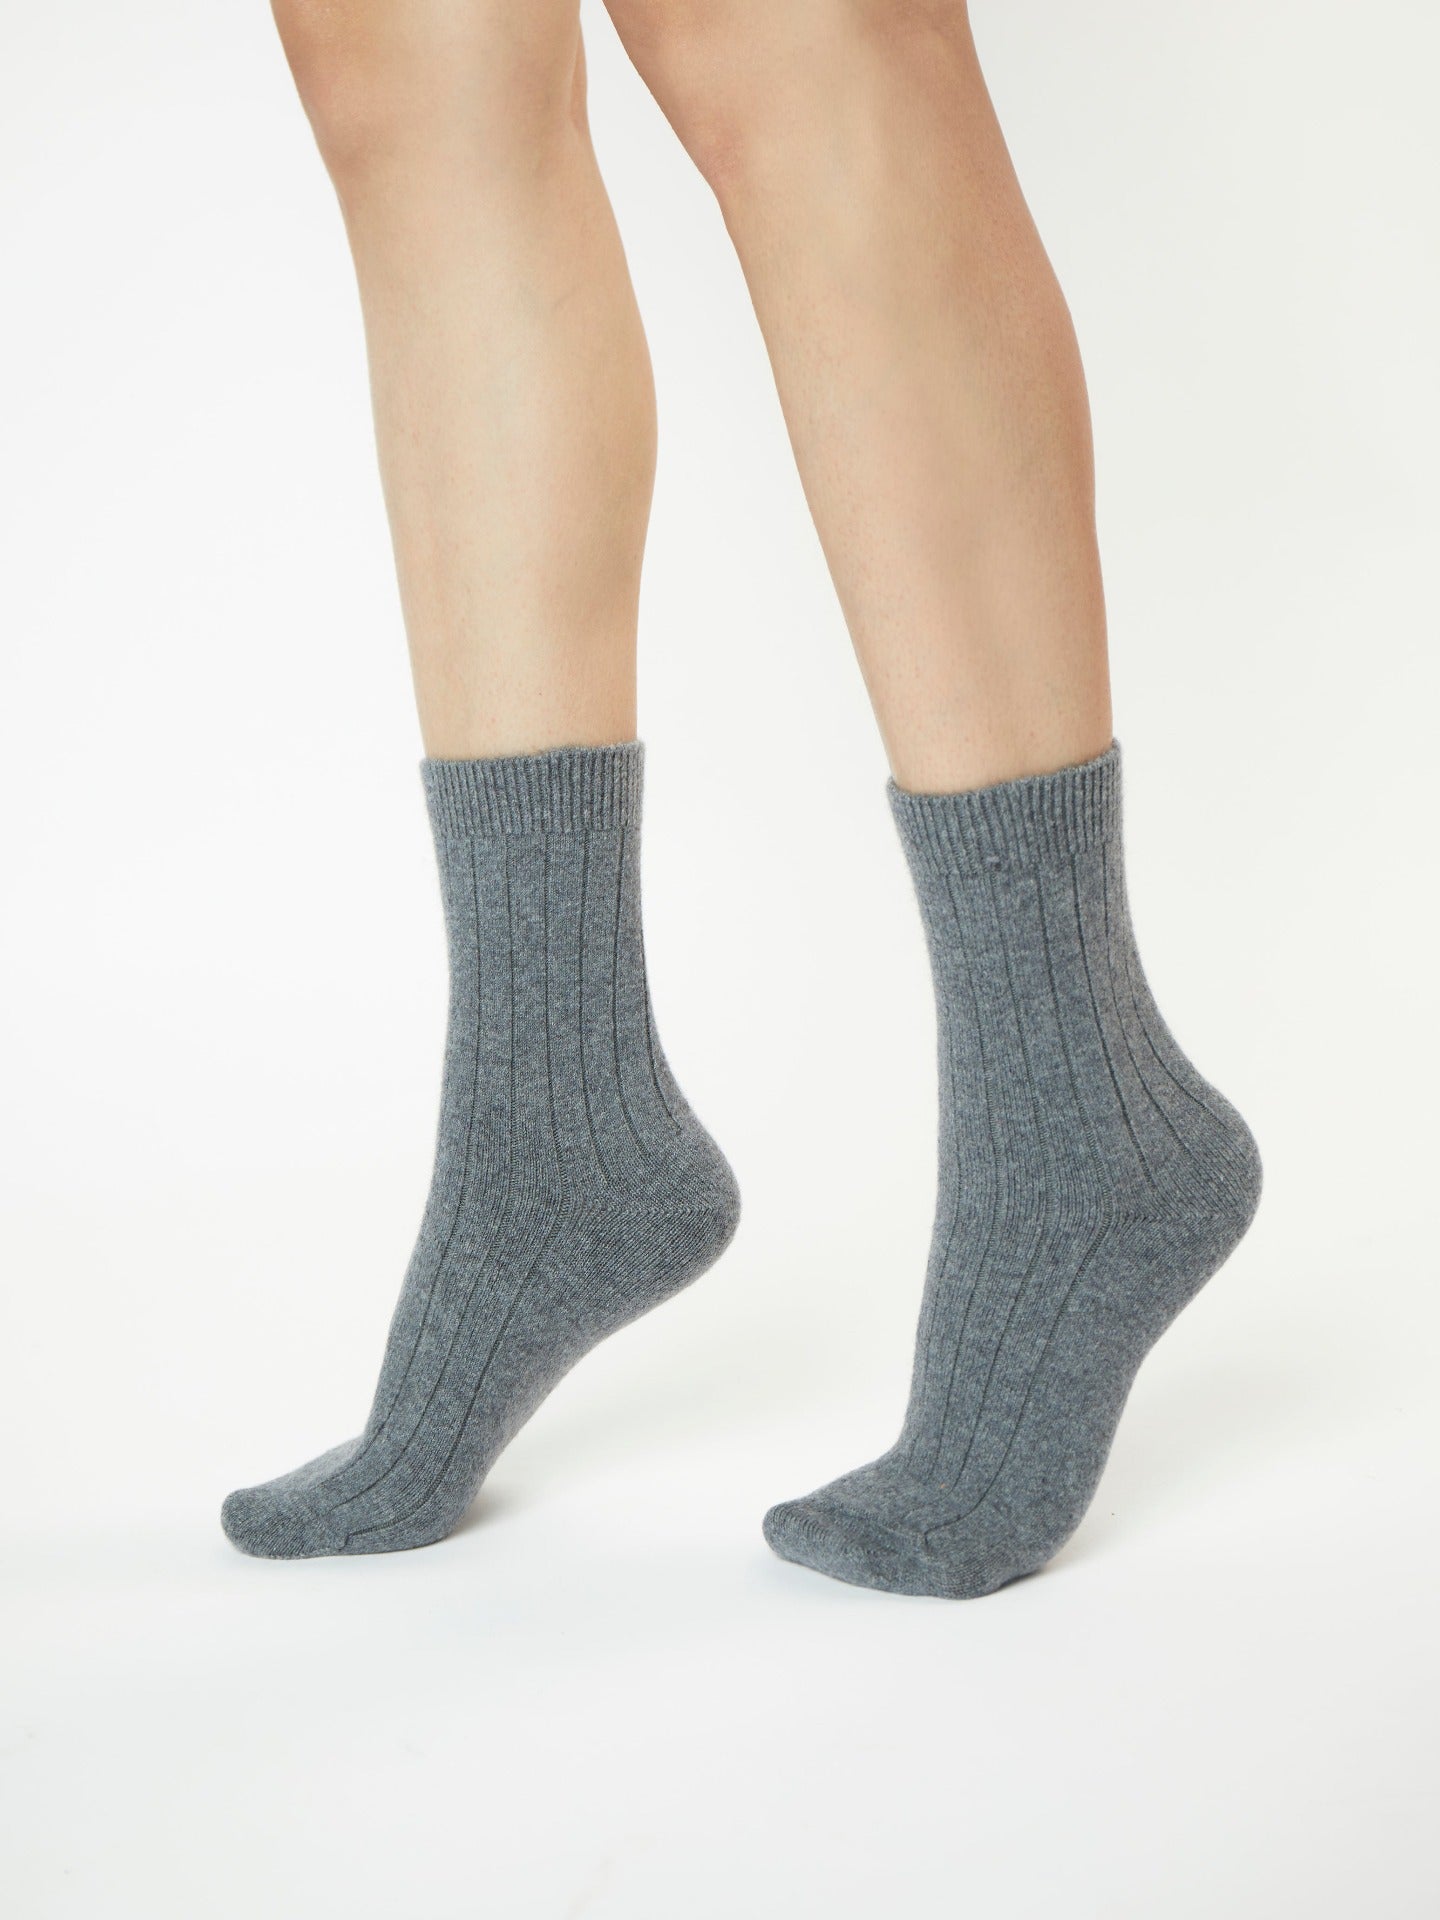 Unisex Cashmere Trim Knit Bed Socks Dim Gray - Gobi Cashmere